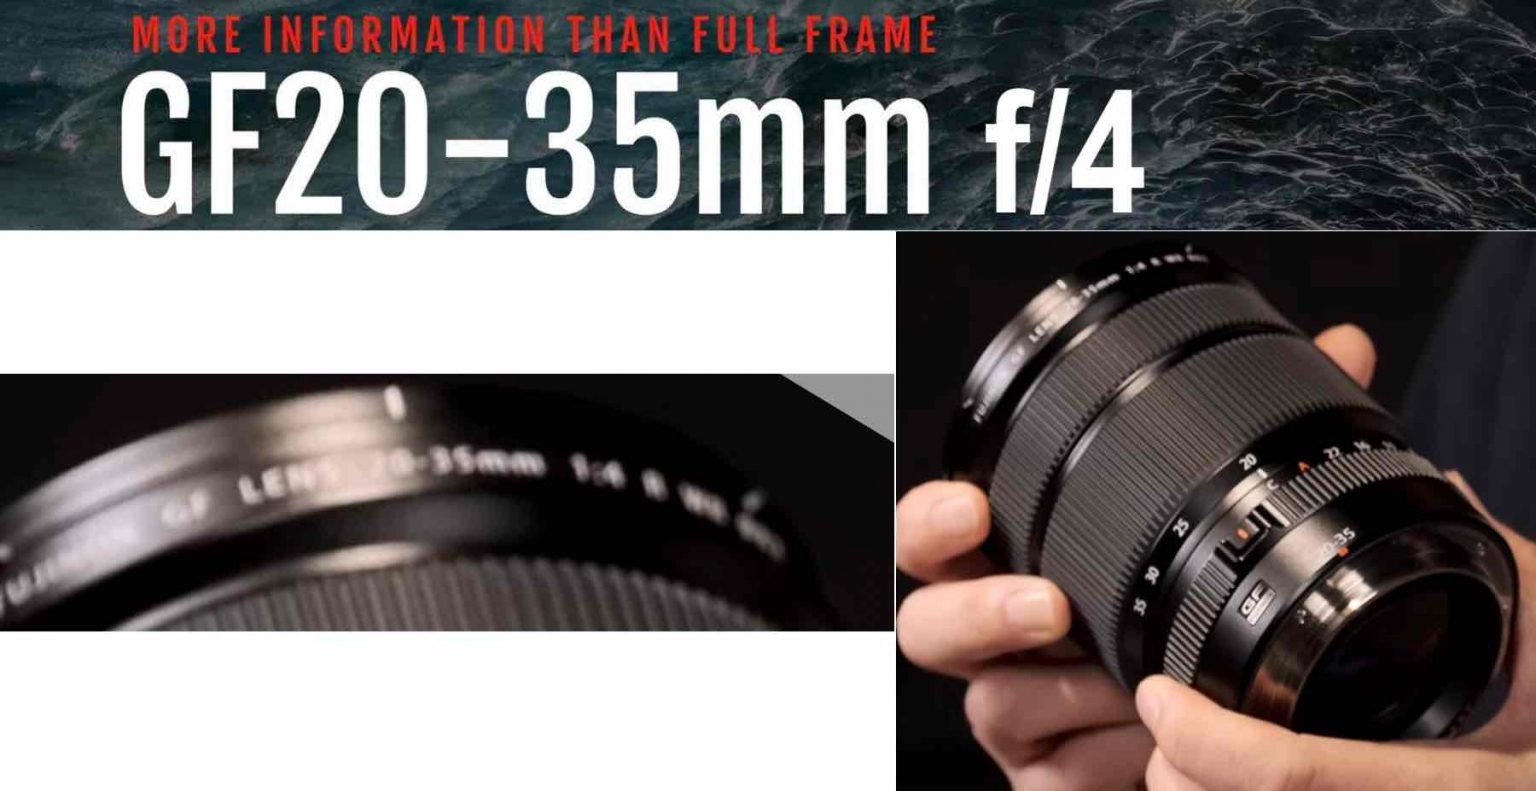 Fujinon GF20-35mm f/4 Constant Aperture (According to Fujifilm's Own Mock-up) - Fuji Rumors